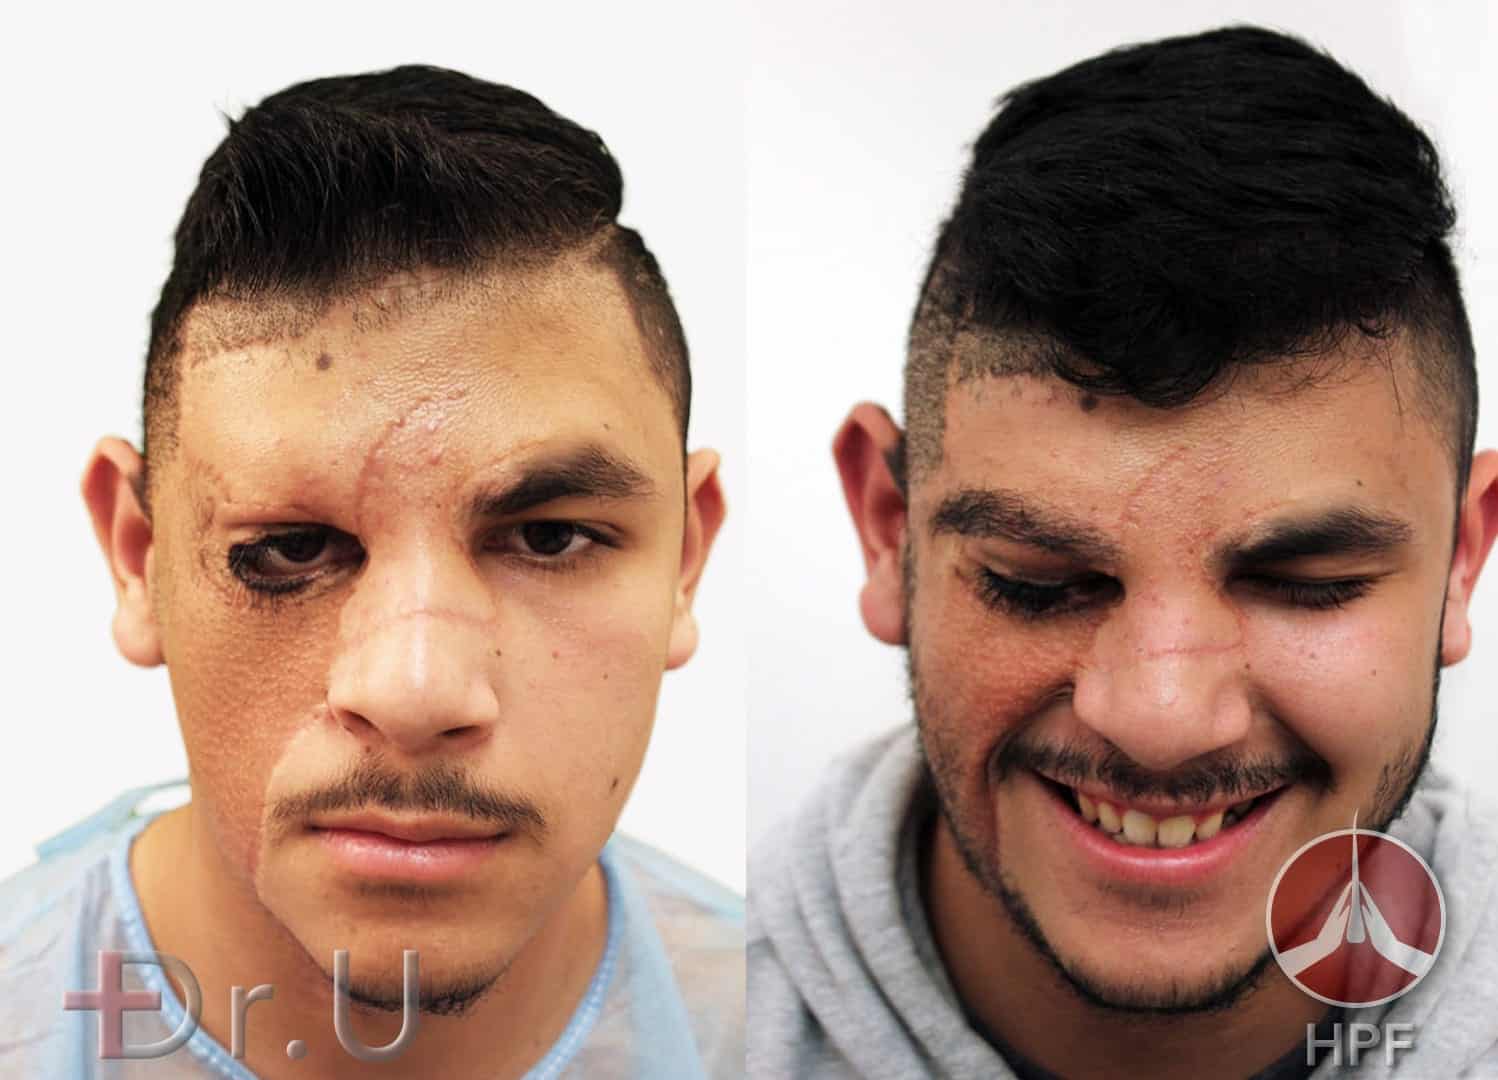 Facial Hair Transplantation Results - Dr. U Reconstruct Eyebrows